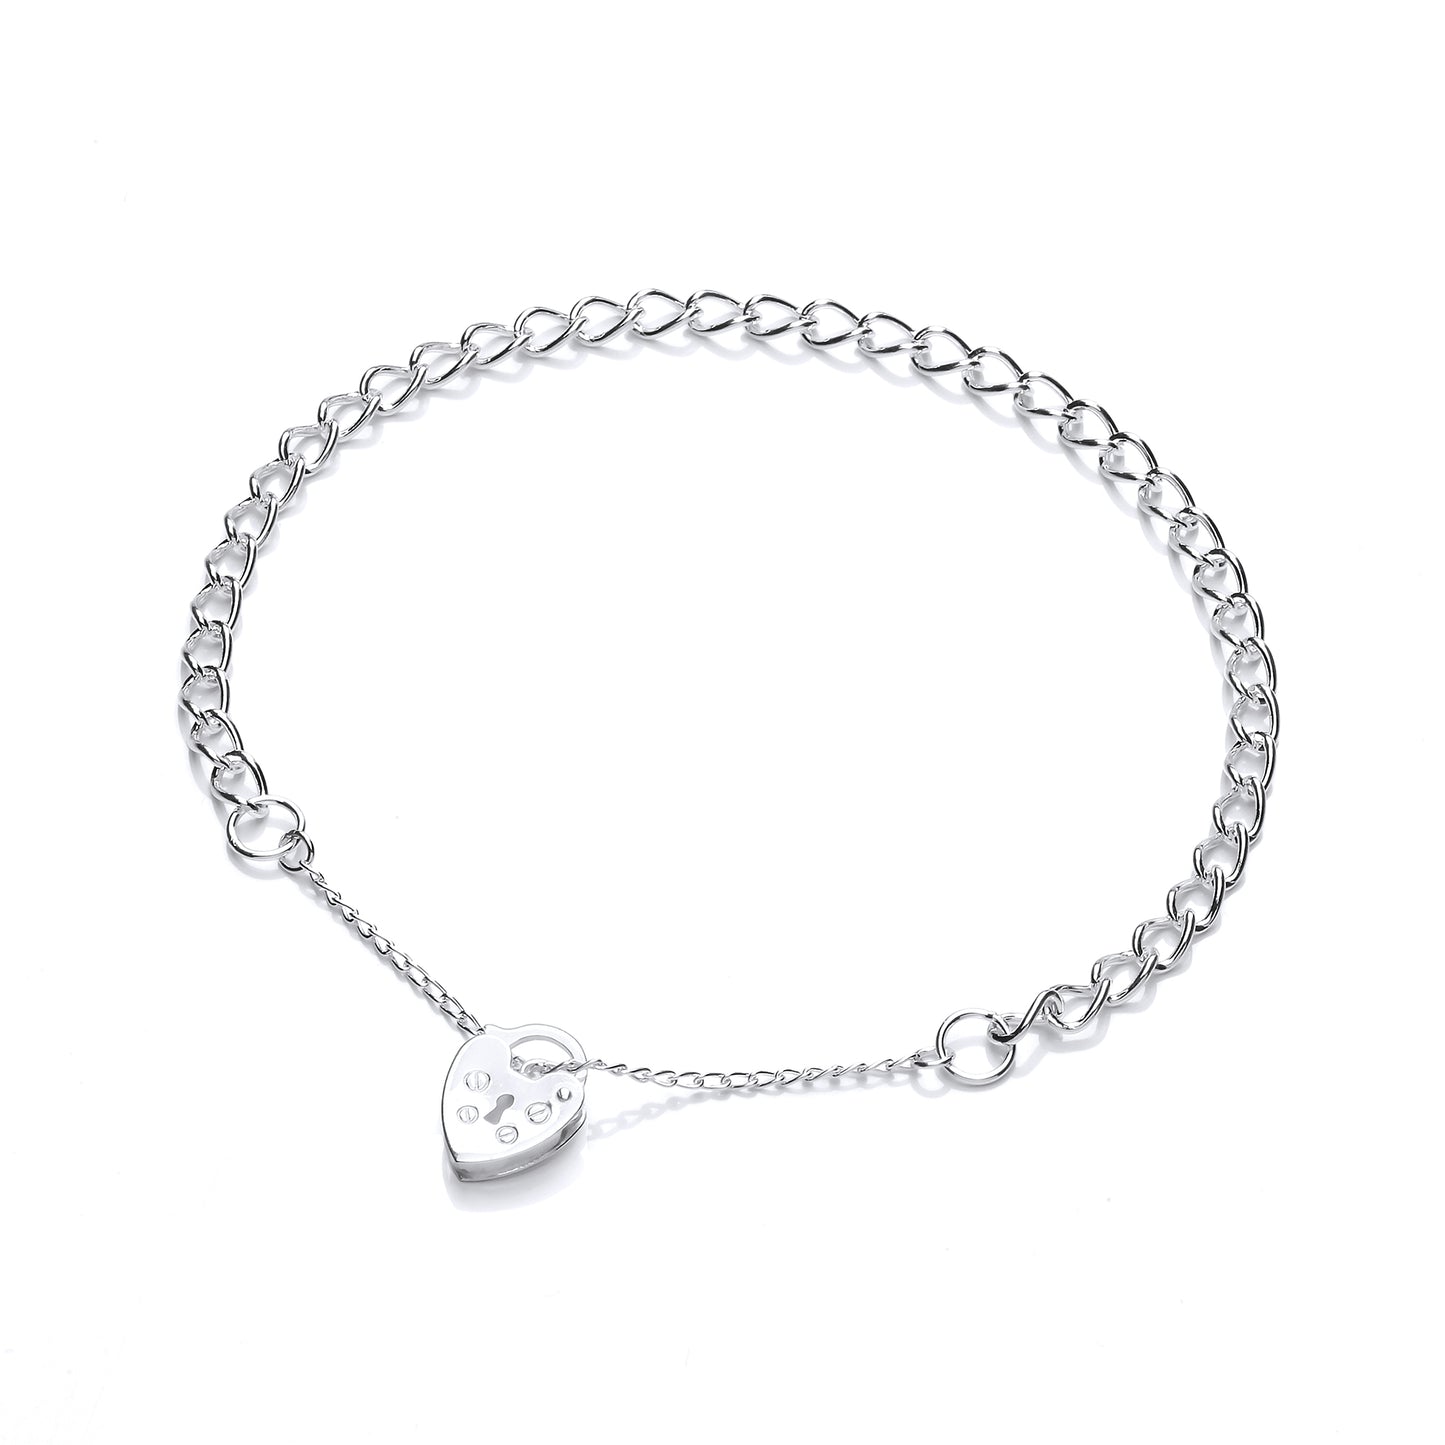 Silver  Curb Link Love Heart Padlock Charm Bracelet 4mm - GVB410